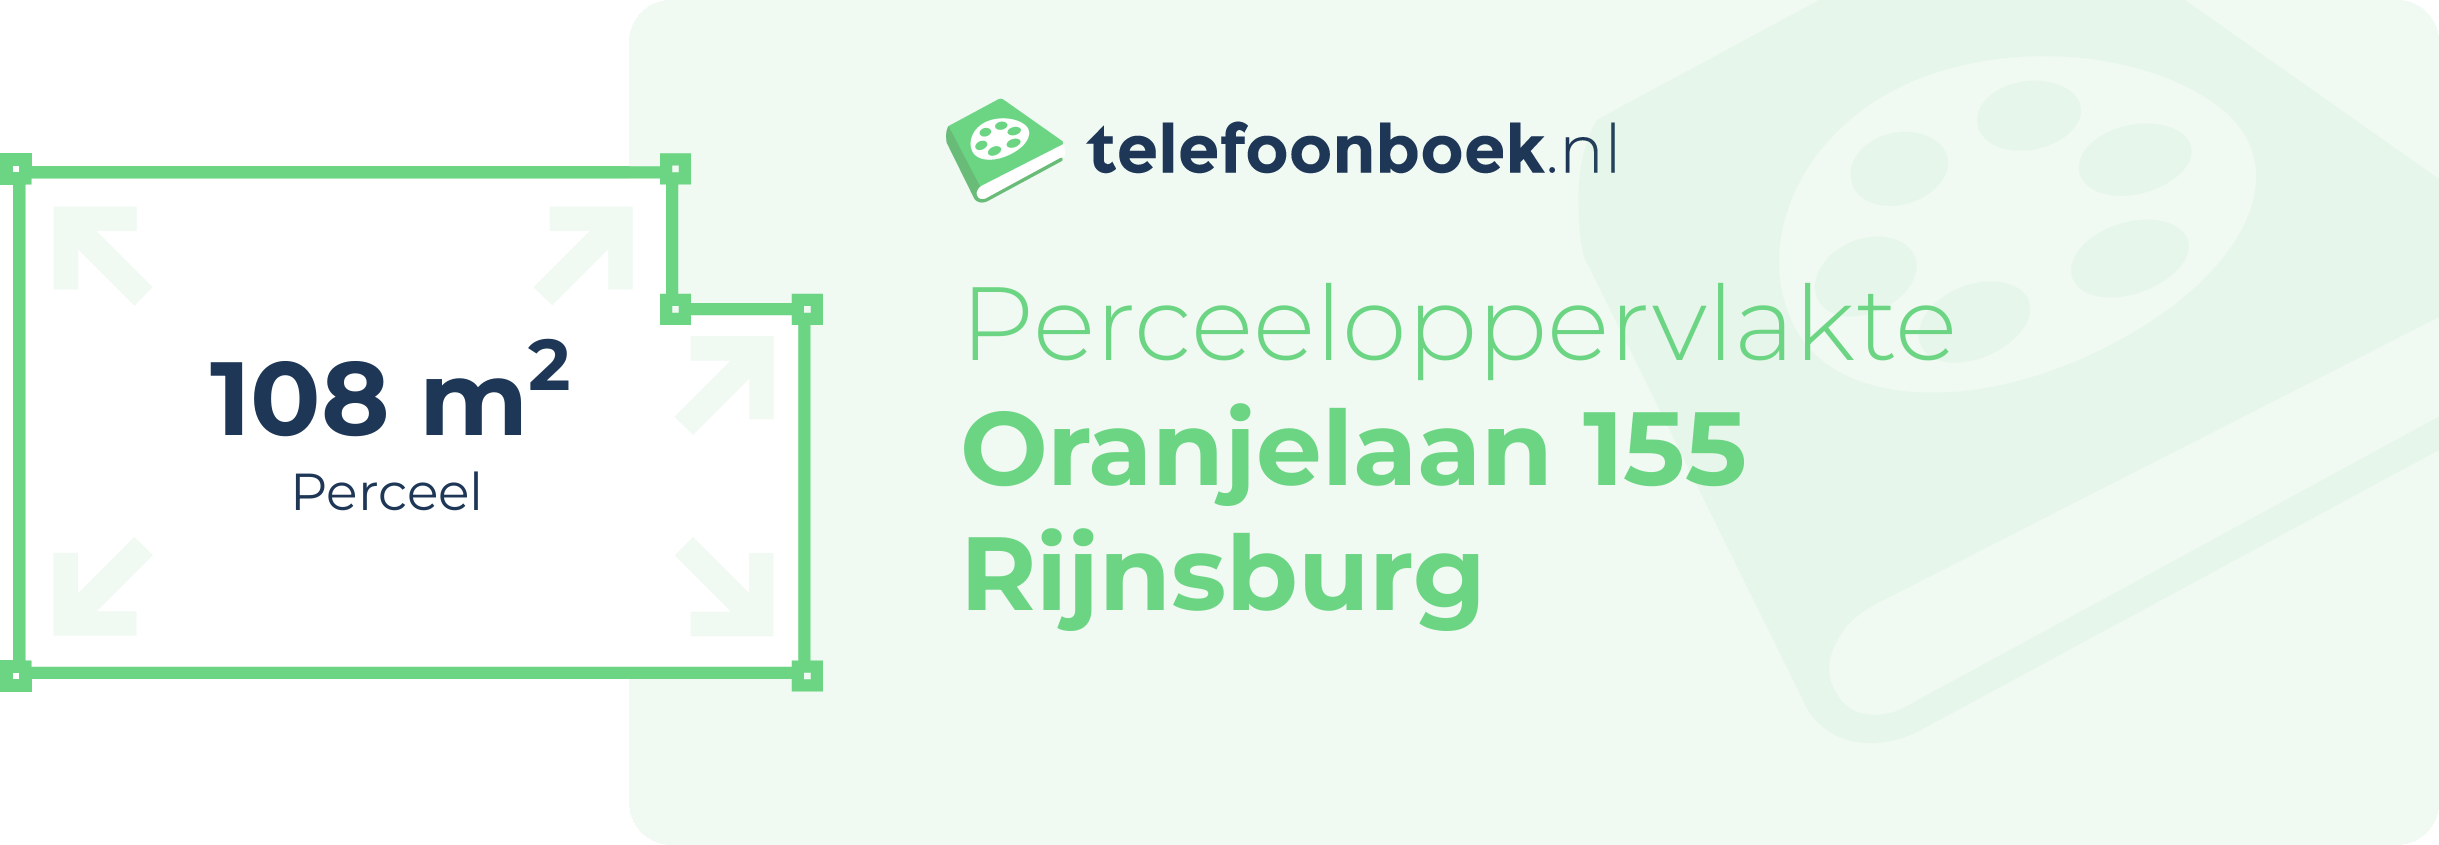 Perceeloppervlakte Oranjelaan 155 Rijnsburg